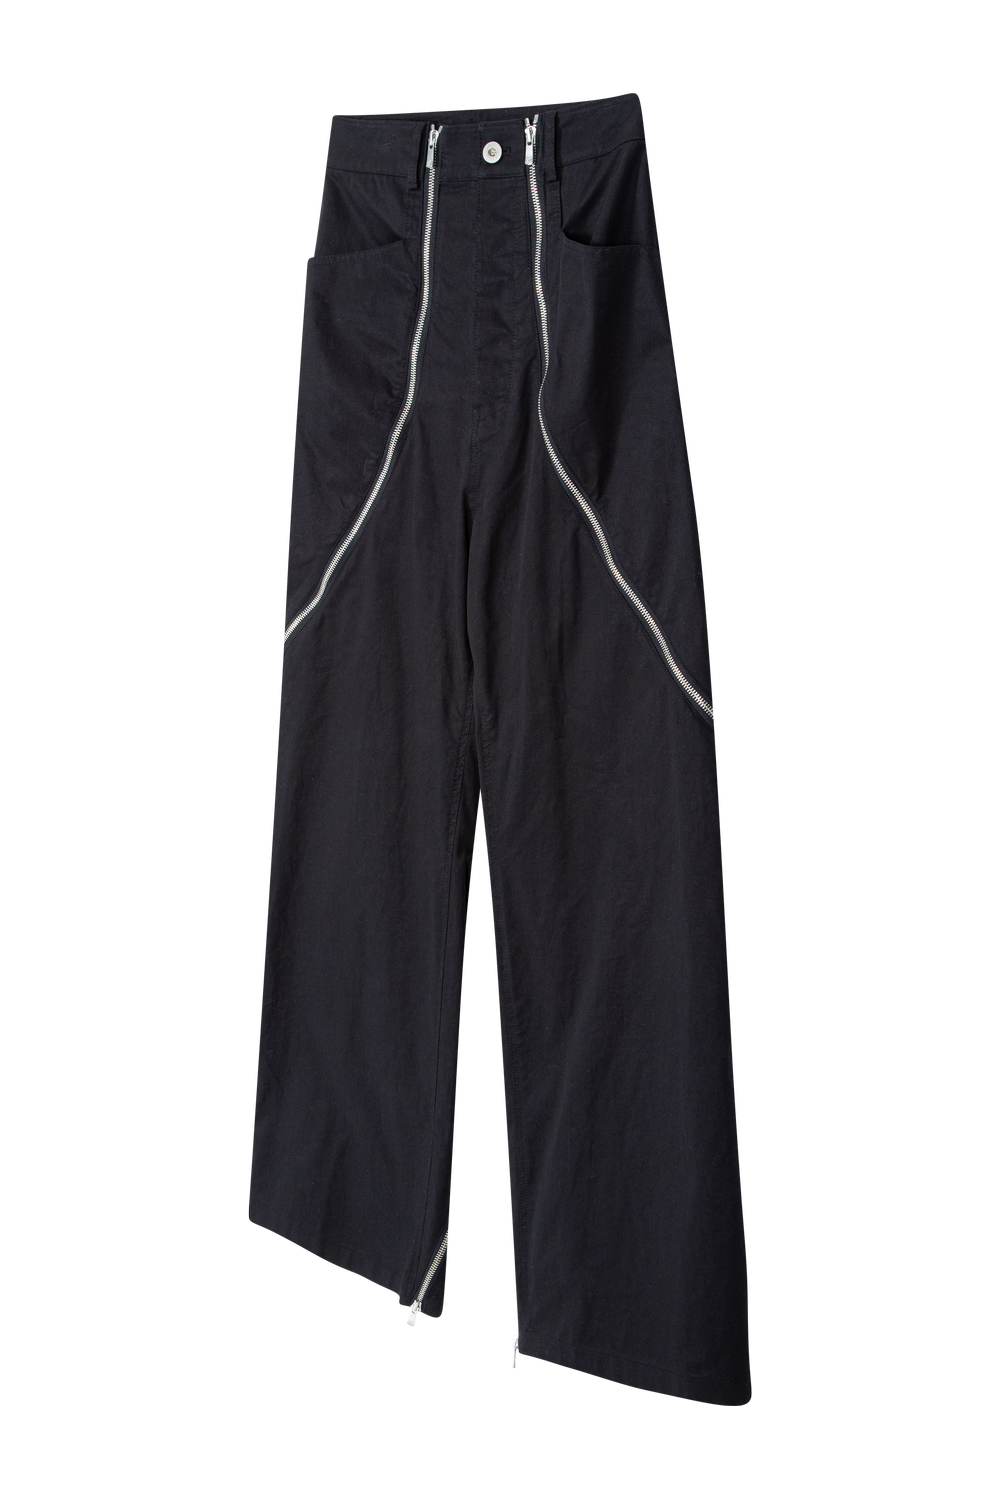 3-Way Zip Trousers CV (Black/Black) — FFFPOSTALSERVICE